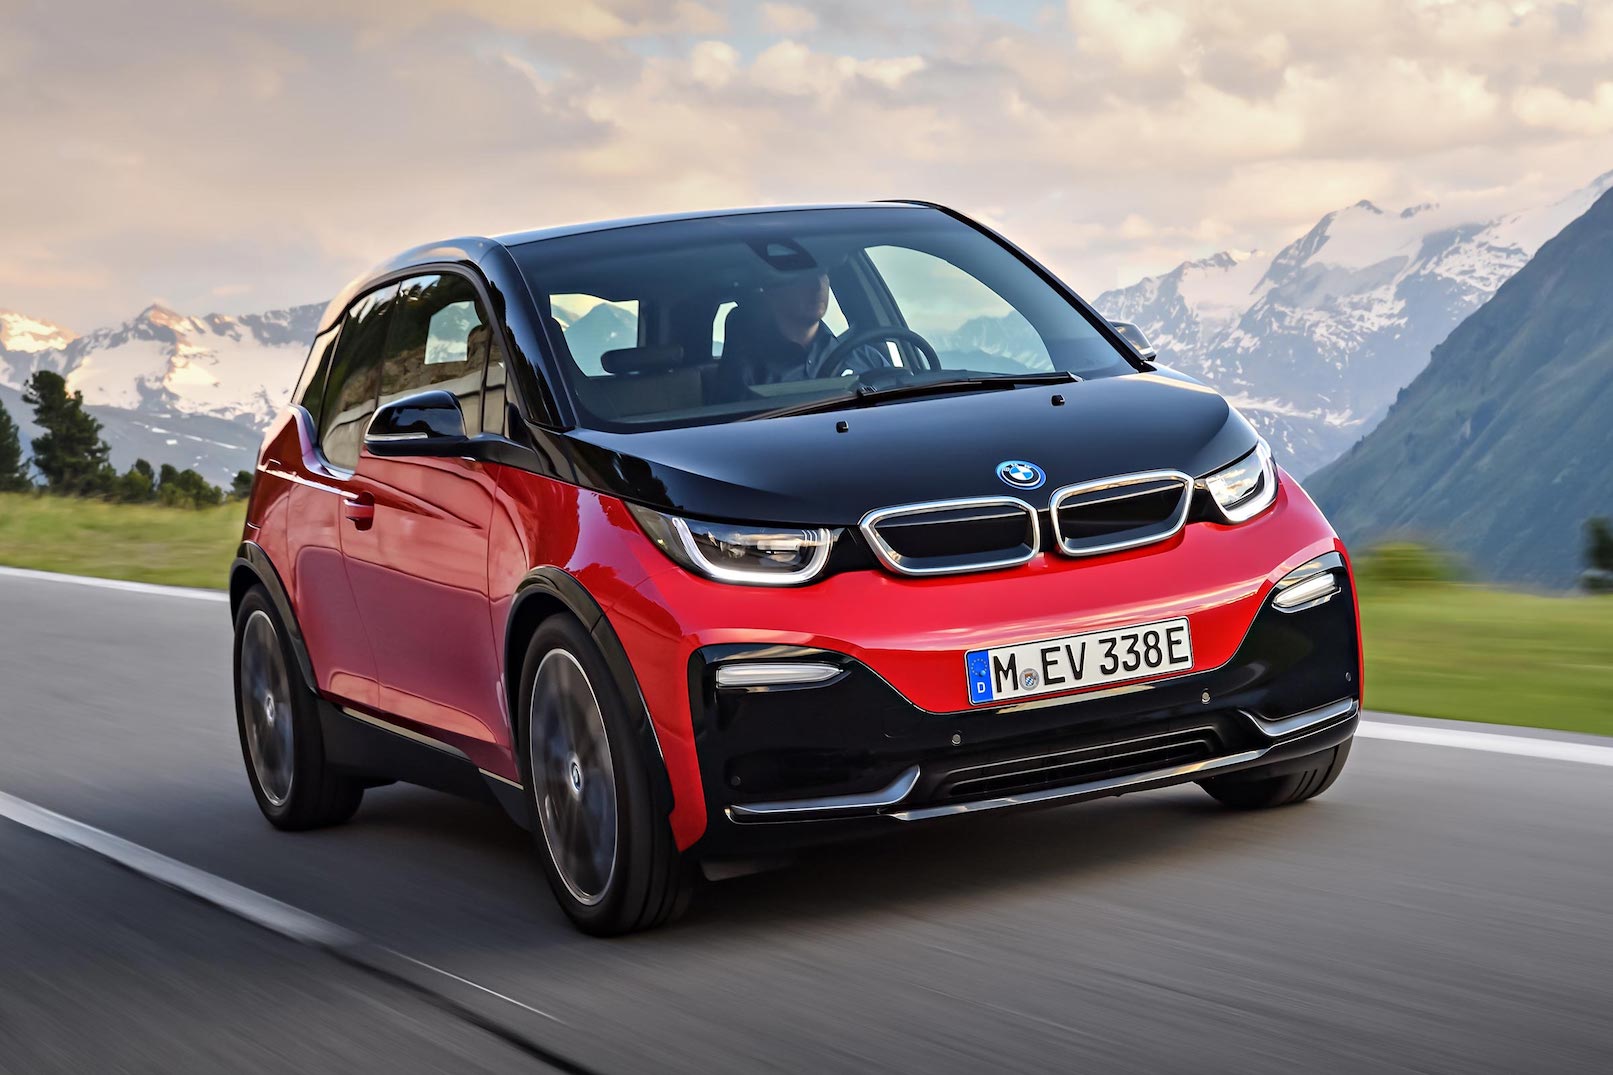 BMW i3 Electric Car - Sleek design and eco-friendly performance.